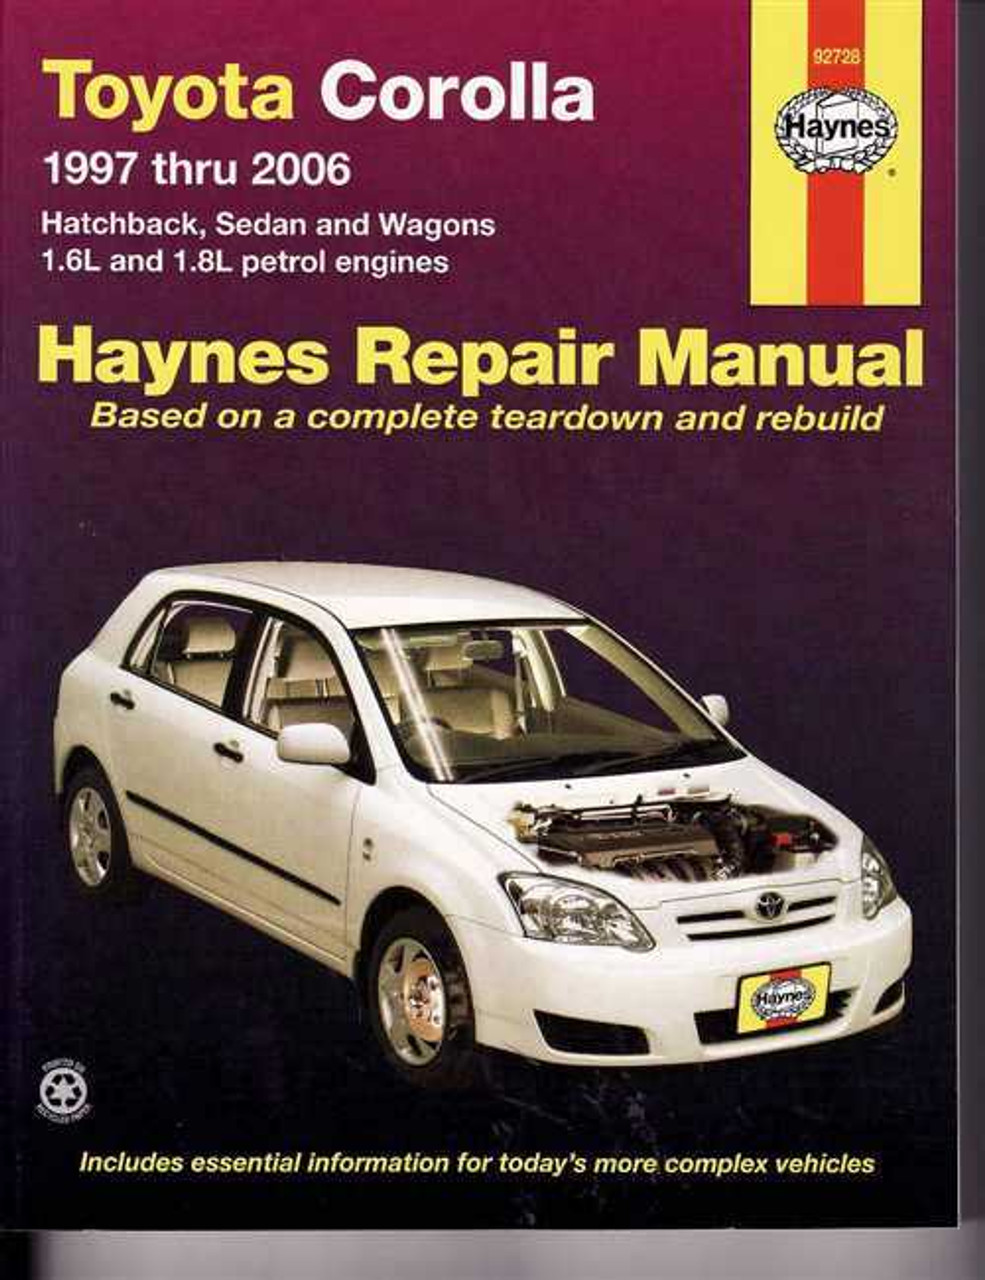 1997 toyota corolla parts manual